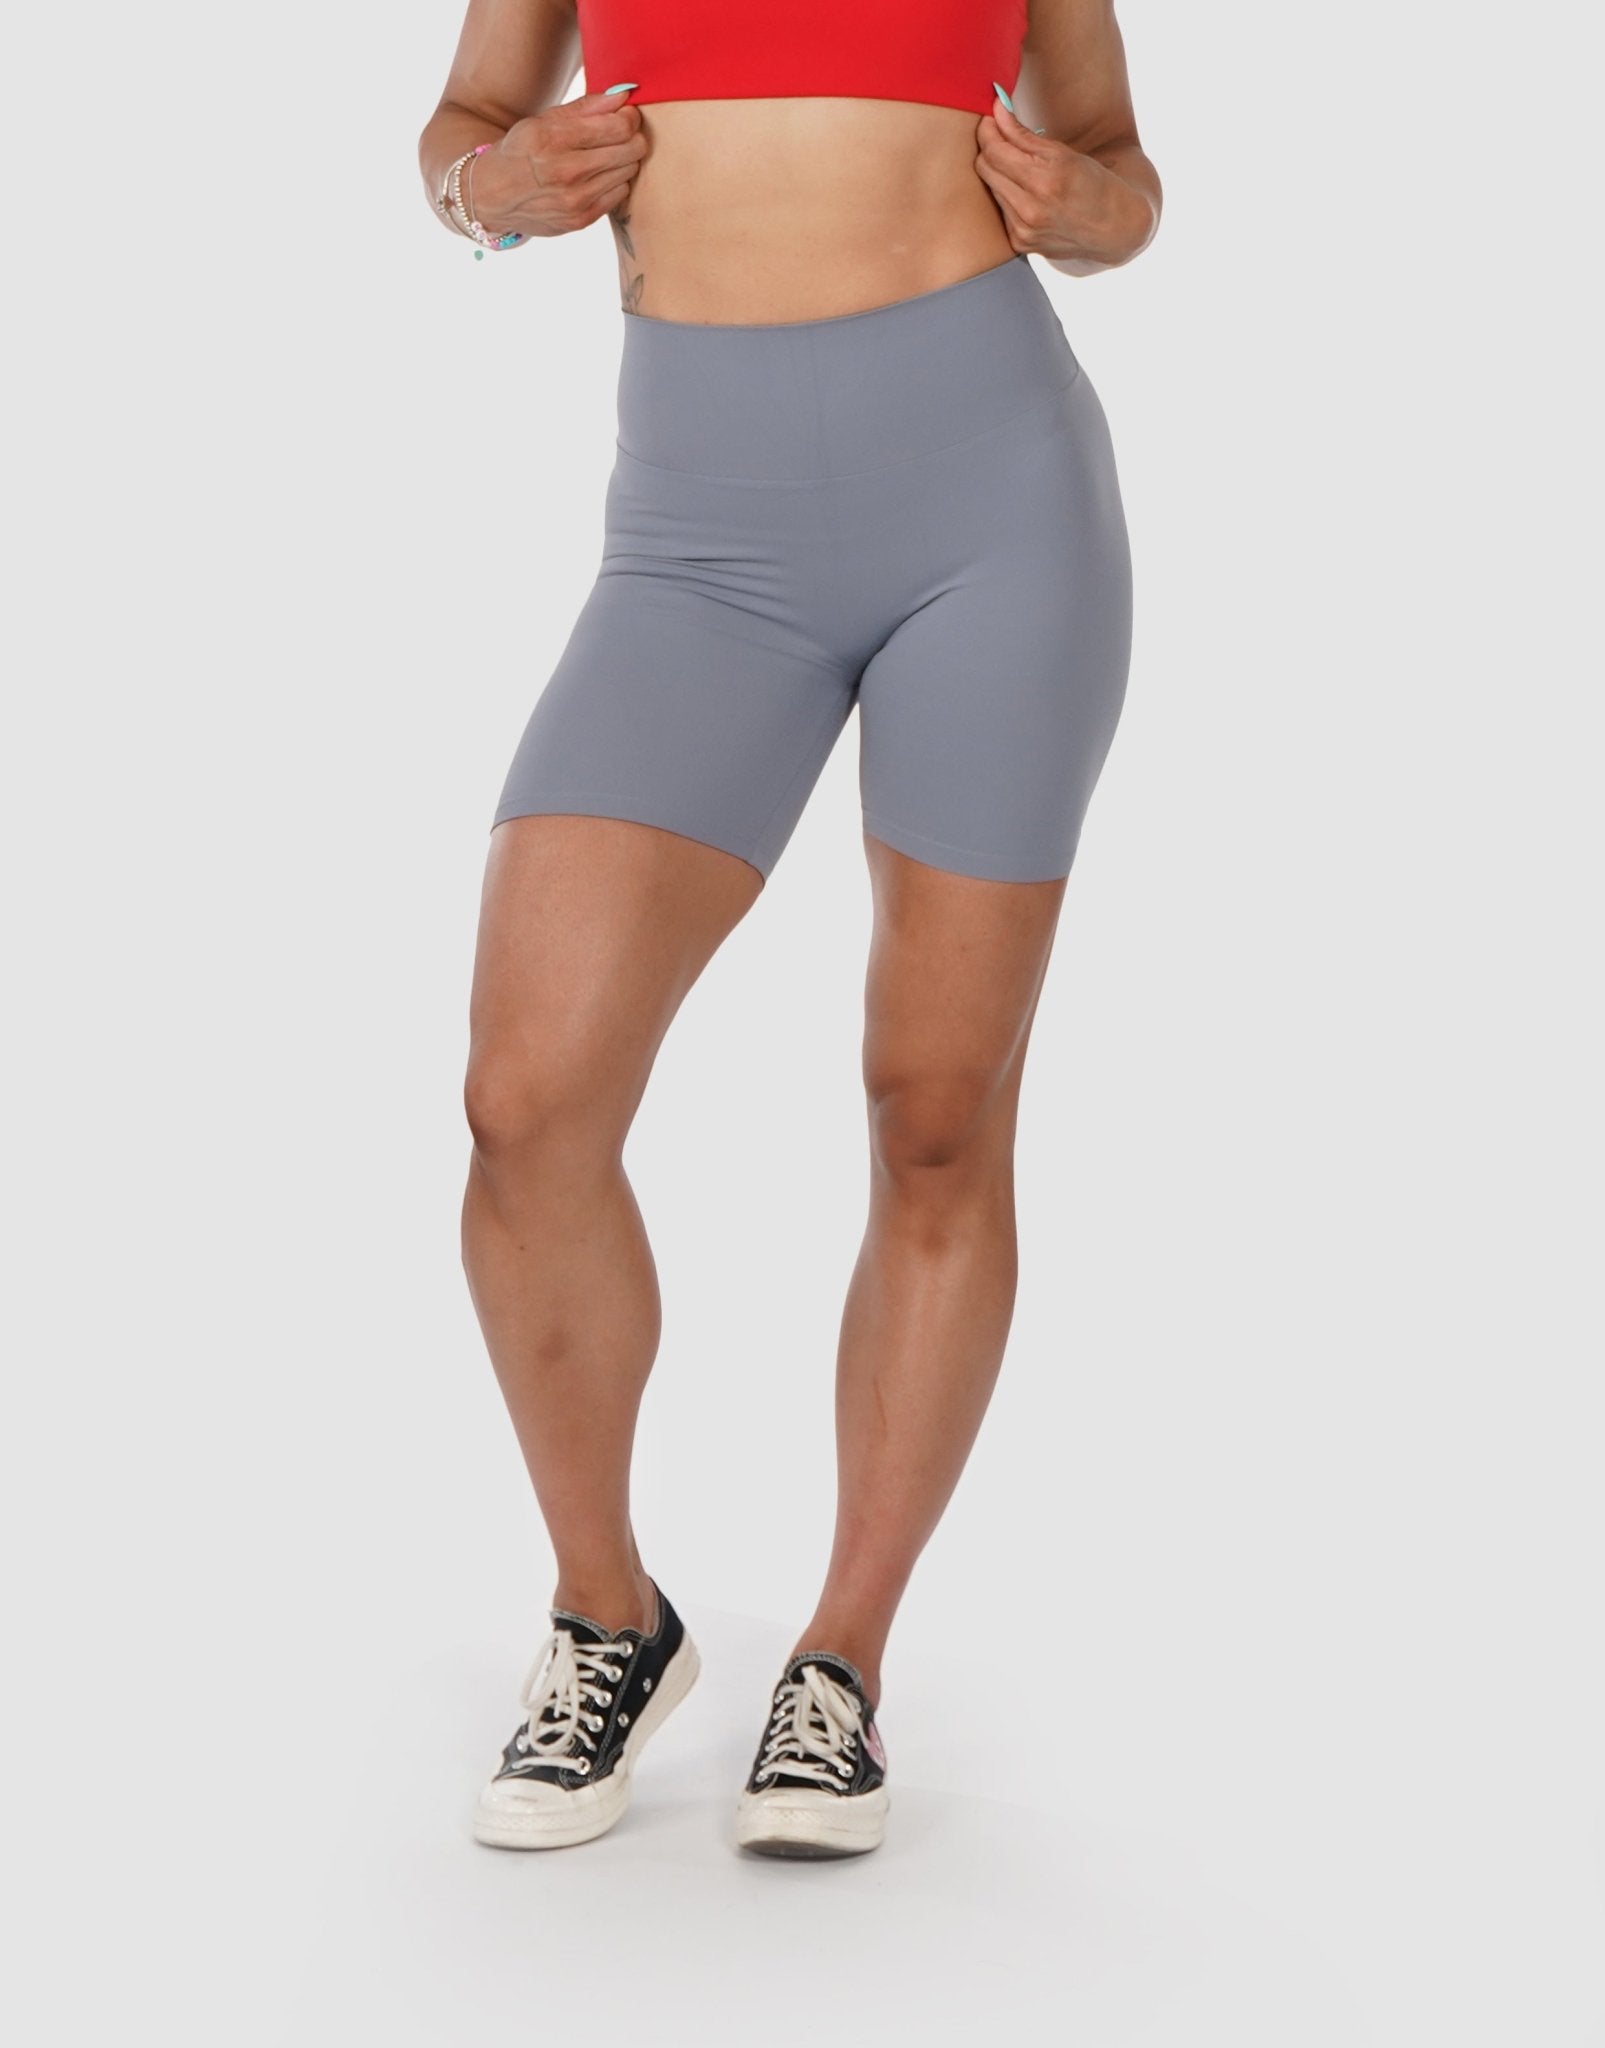 Shop Buttock Shorts online